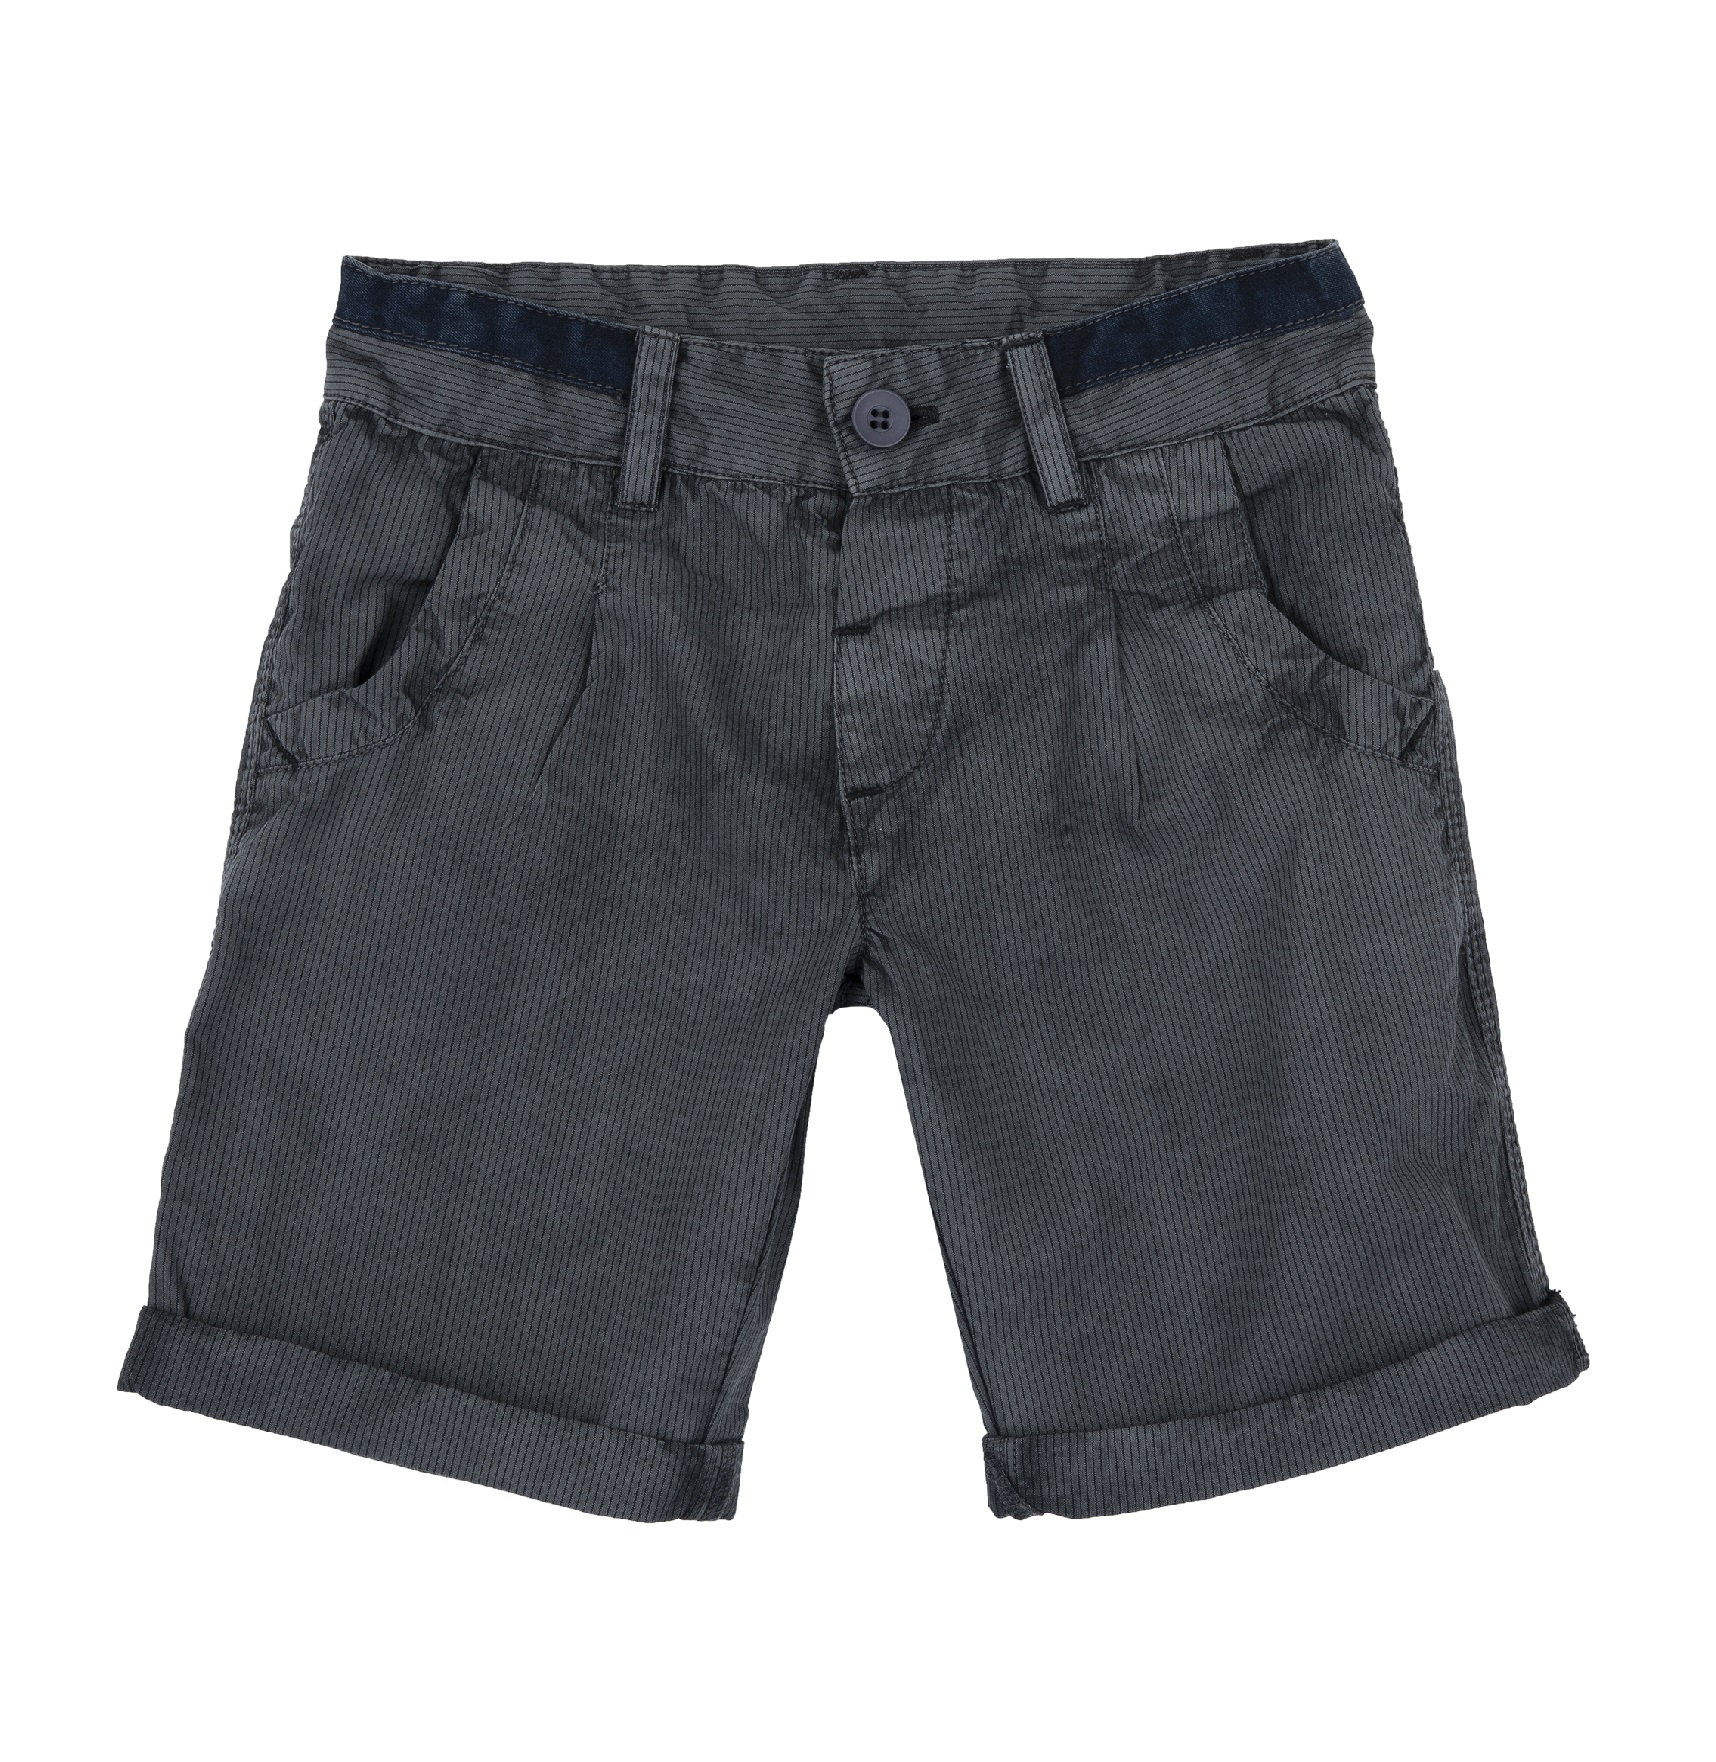 Pantaloni copii Chicco, Negru, 00263-64MC Pantaloni copii